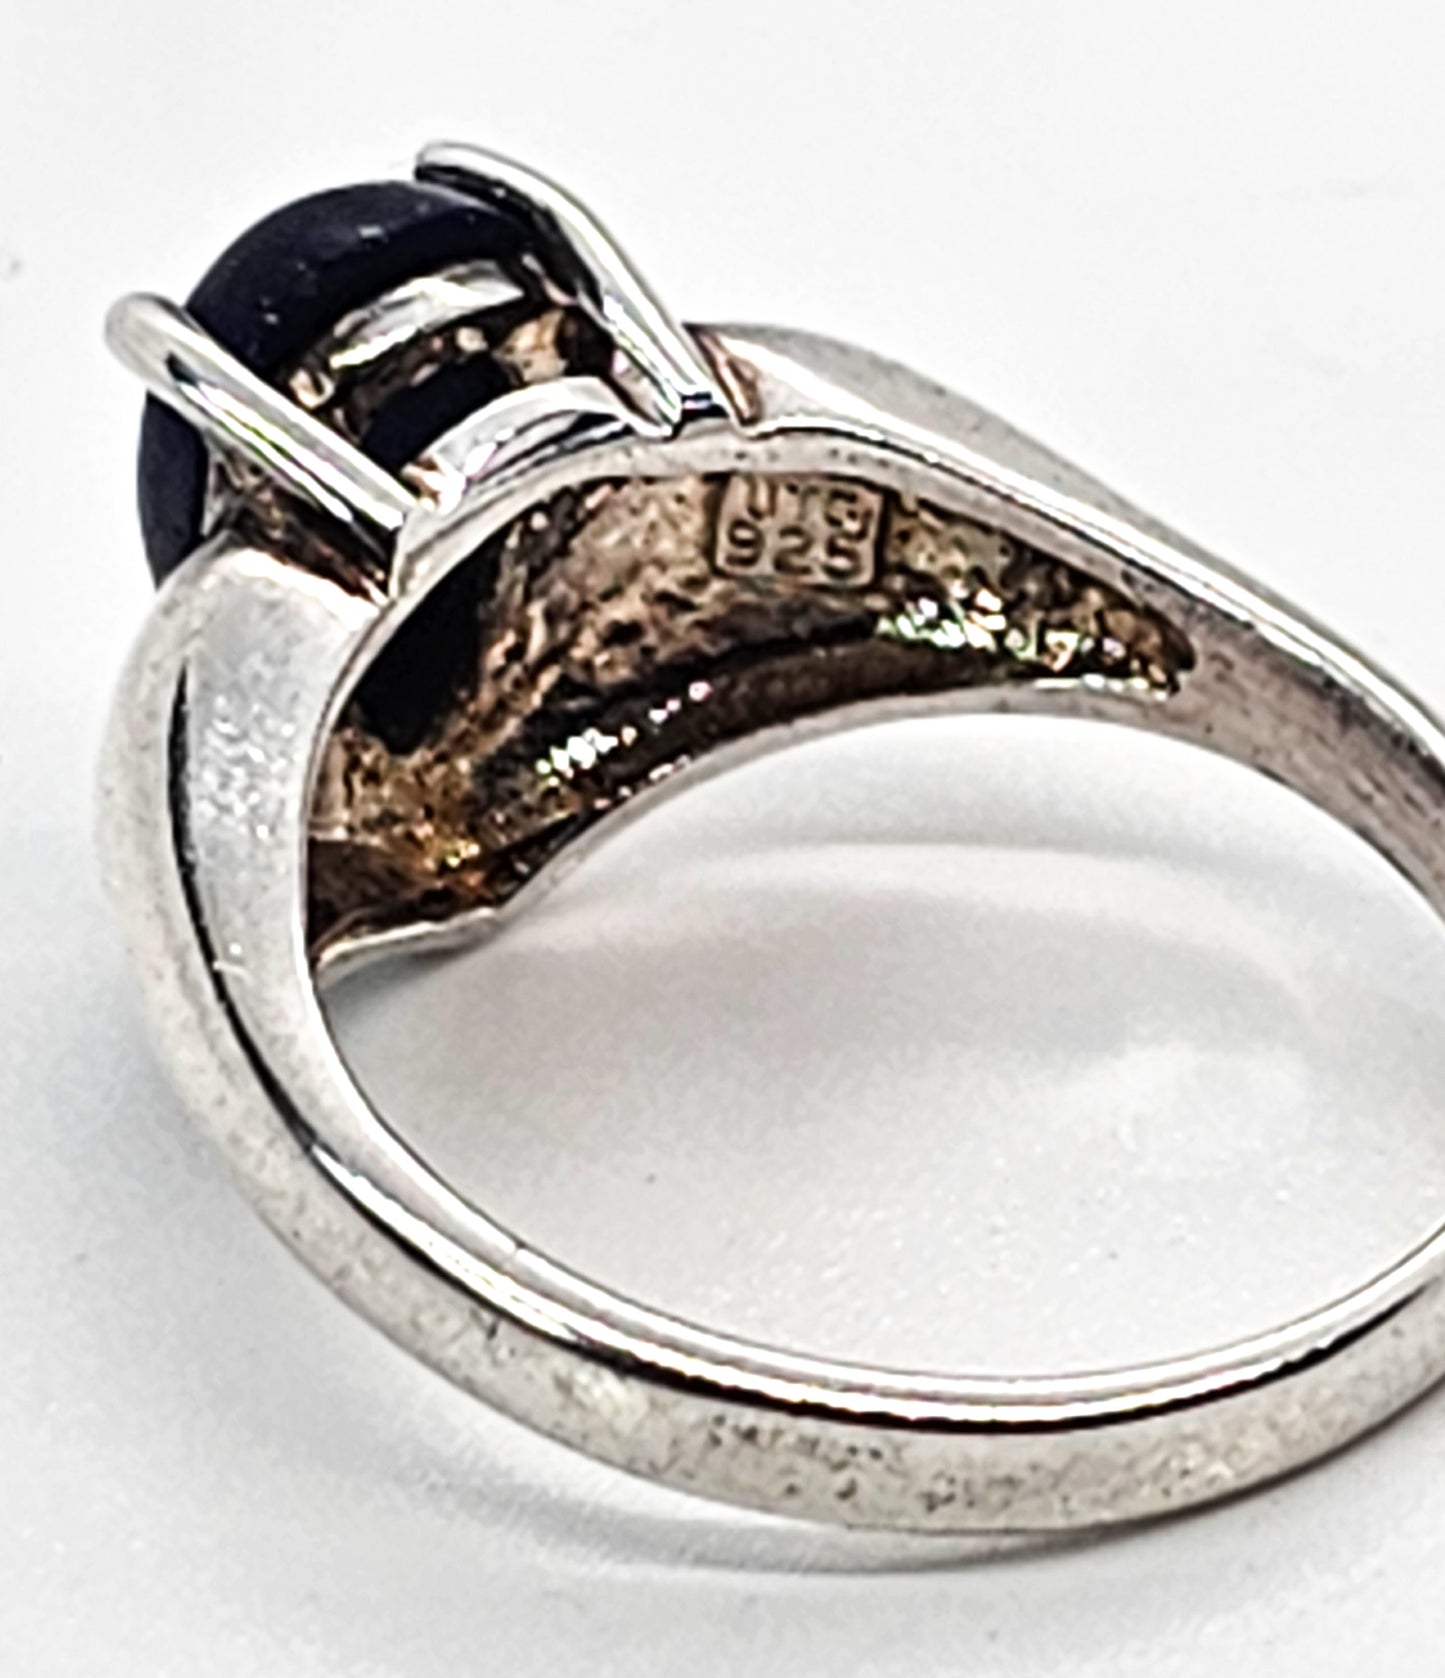 Lapis Lazuli blue pear cut gemstone sterling silver ring size 9